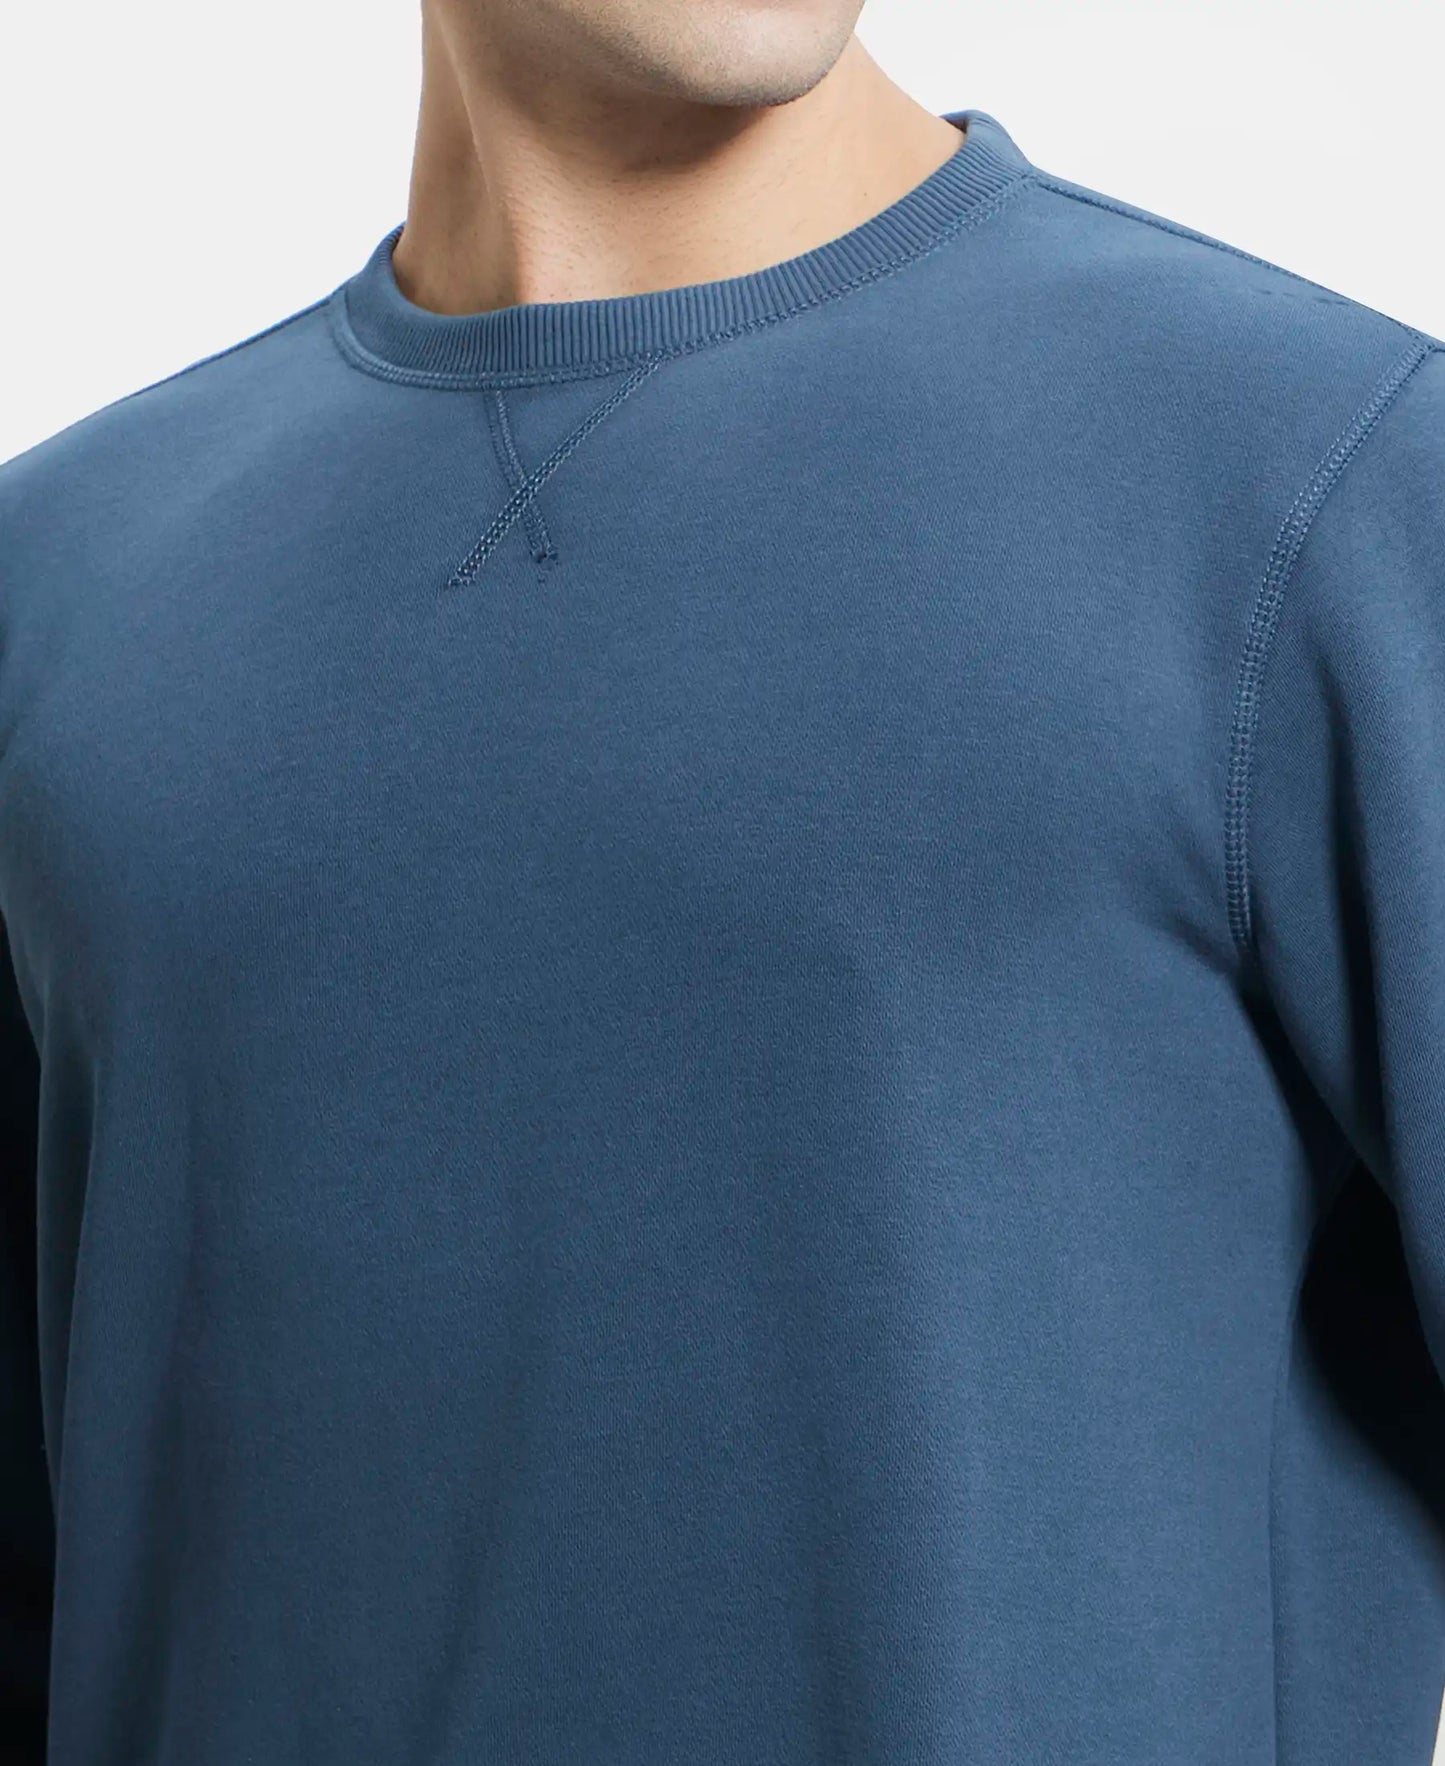 Super Combed Cotton Rich Fleece Sweatshirt with StayWarm Technology - Mid Night Navy-6